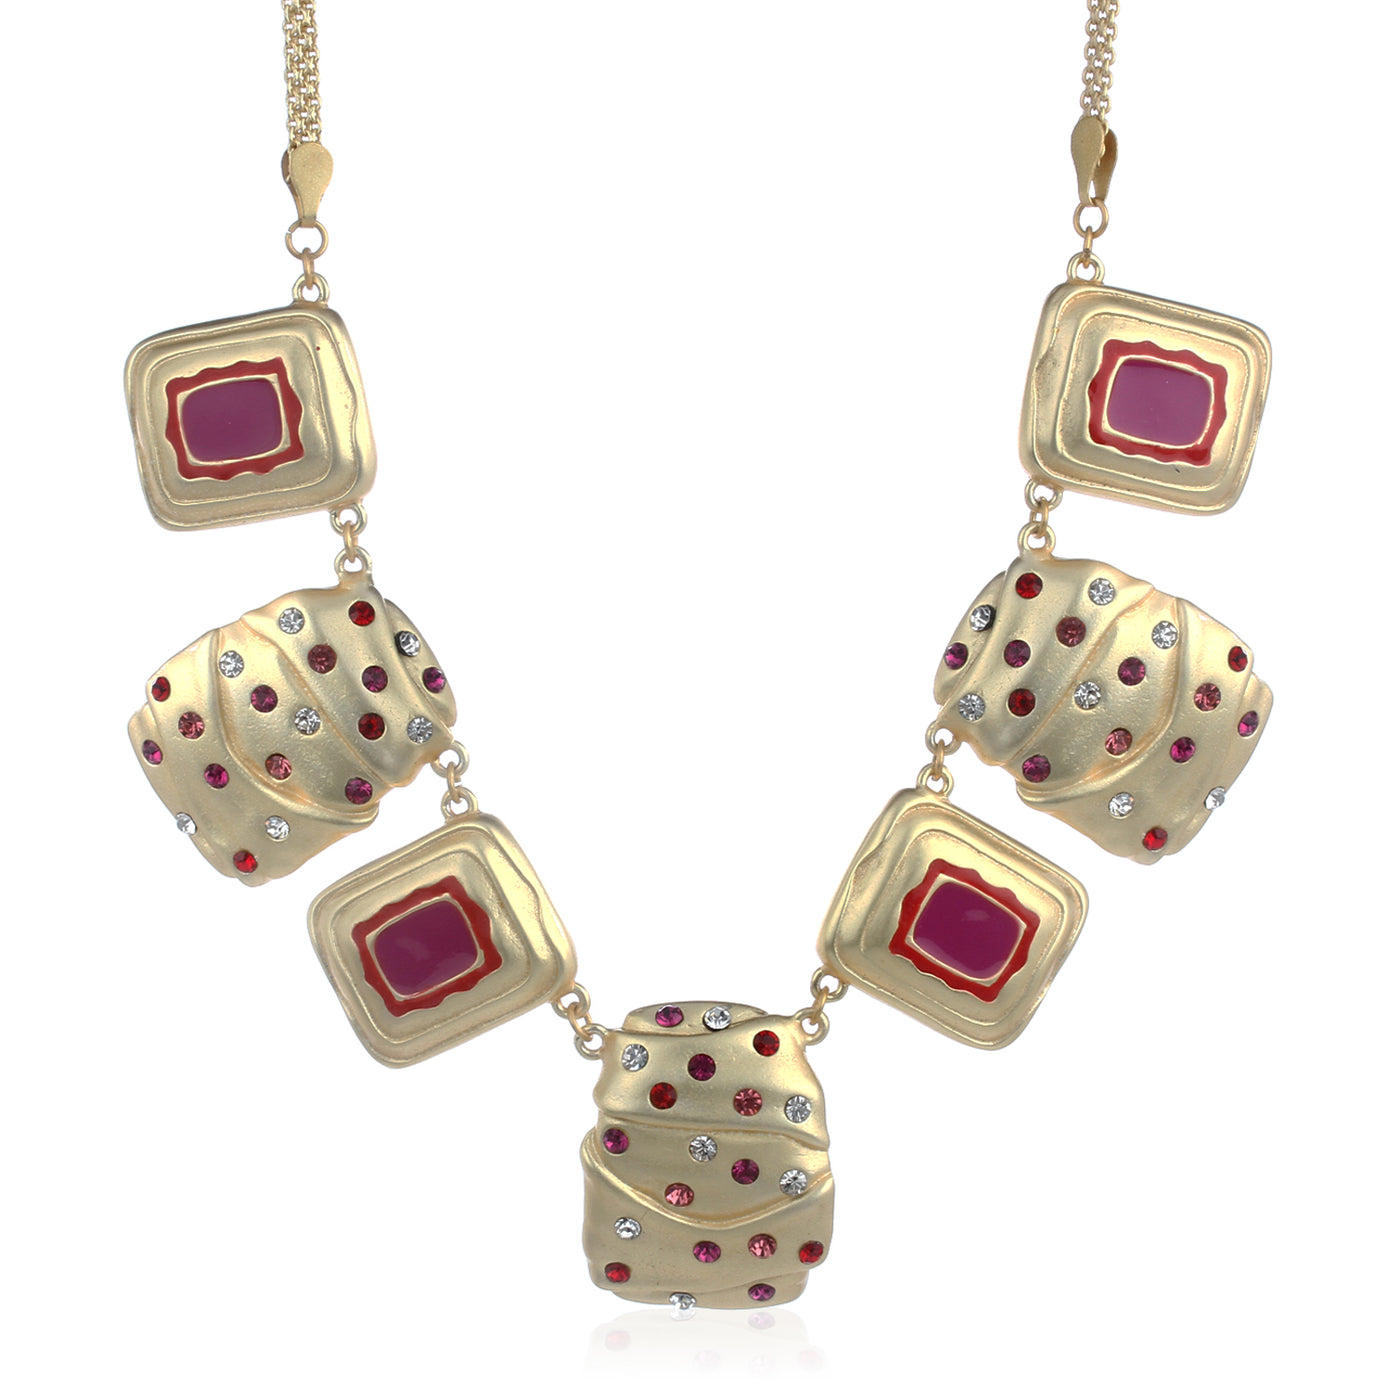 Satin Matt Imitation Gold Tone Plated Pink Enamel Necklace Set